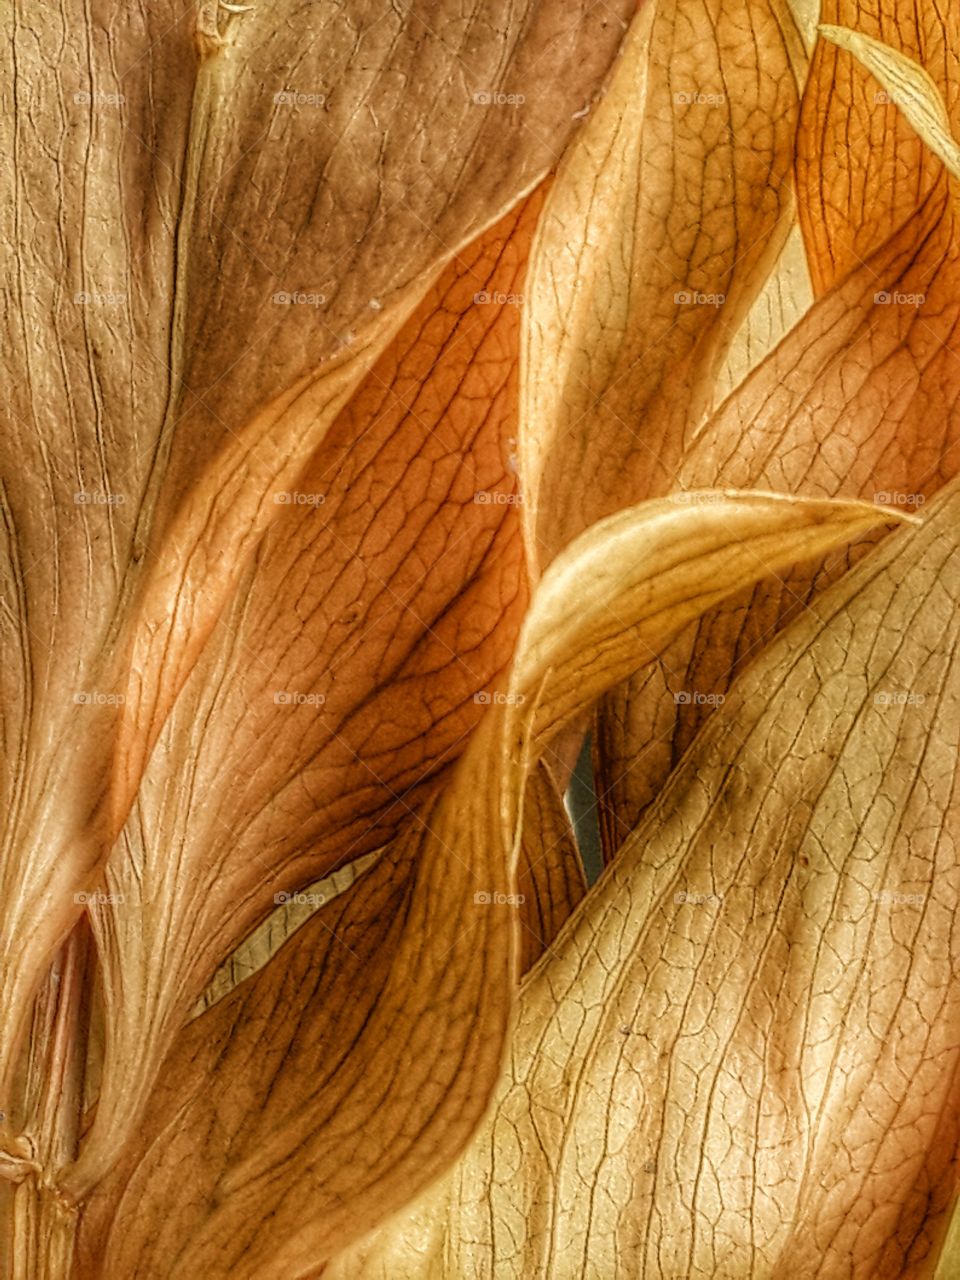 Dried leaf in detail